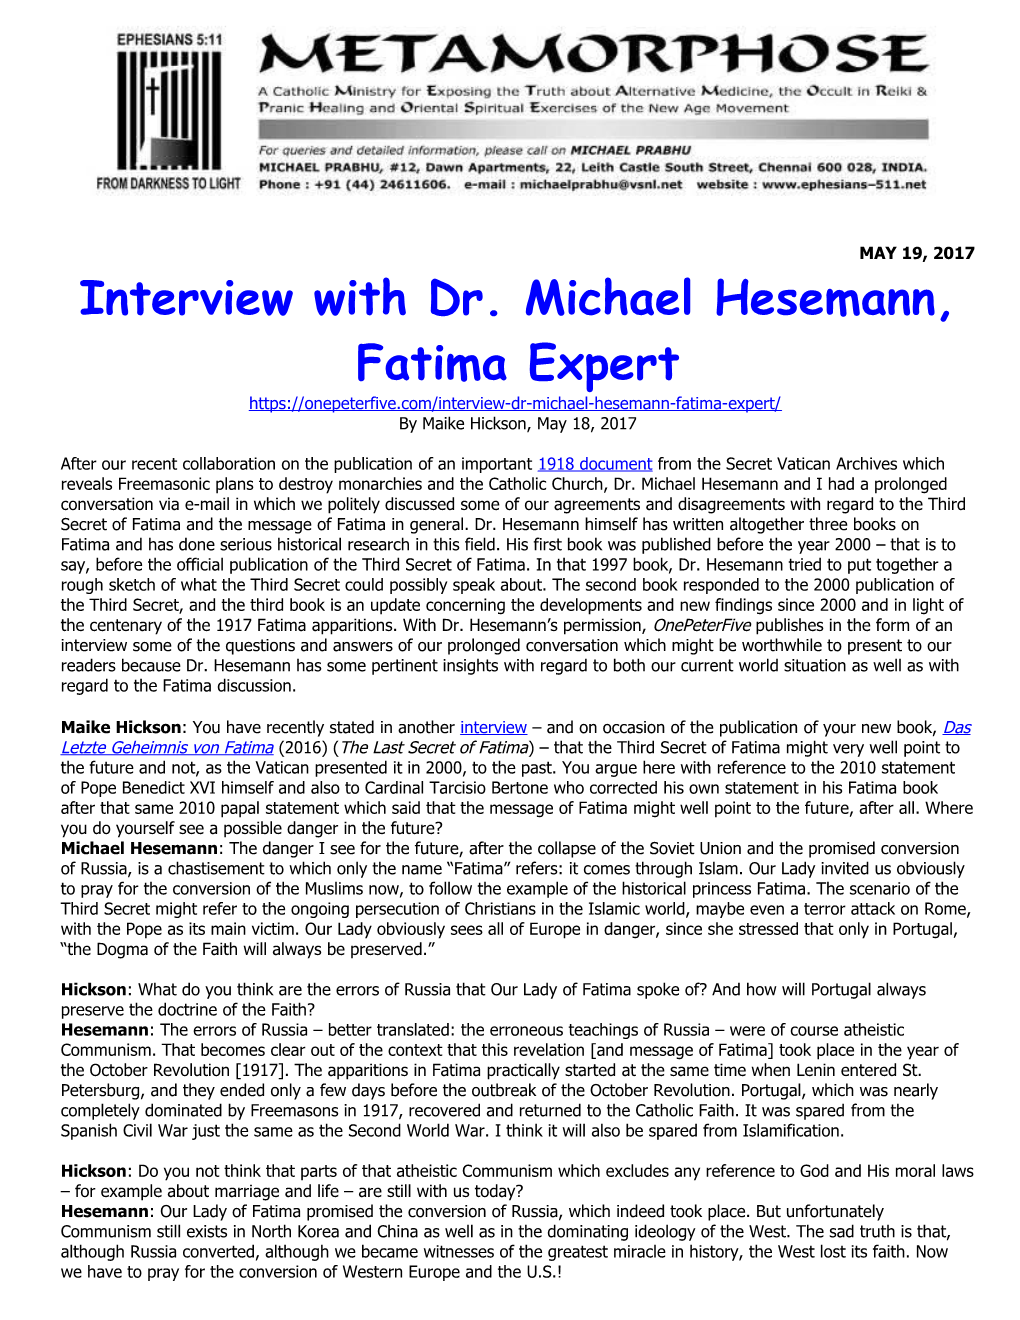 Interview with Dr. Michael Hesemann, Fatima Expert